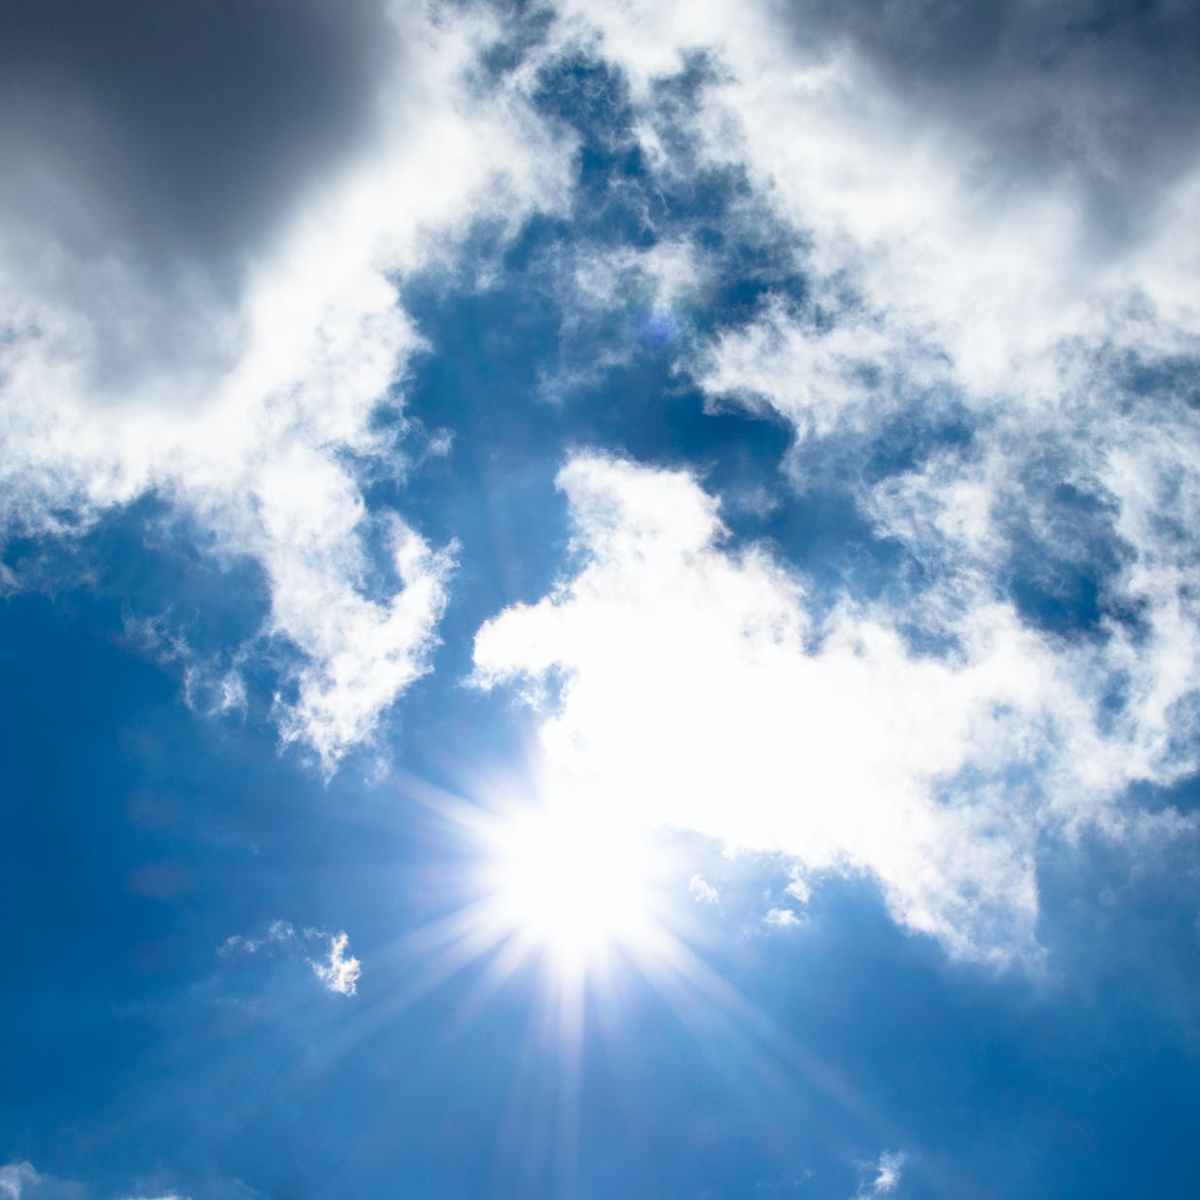 sunlight-white-clouds-blue-sky.jpg